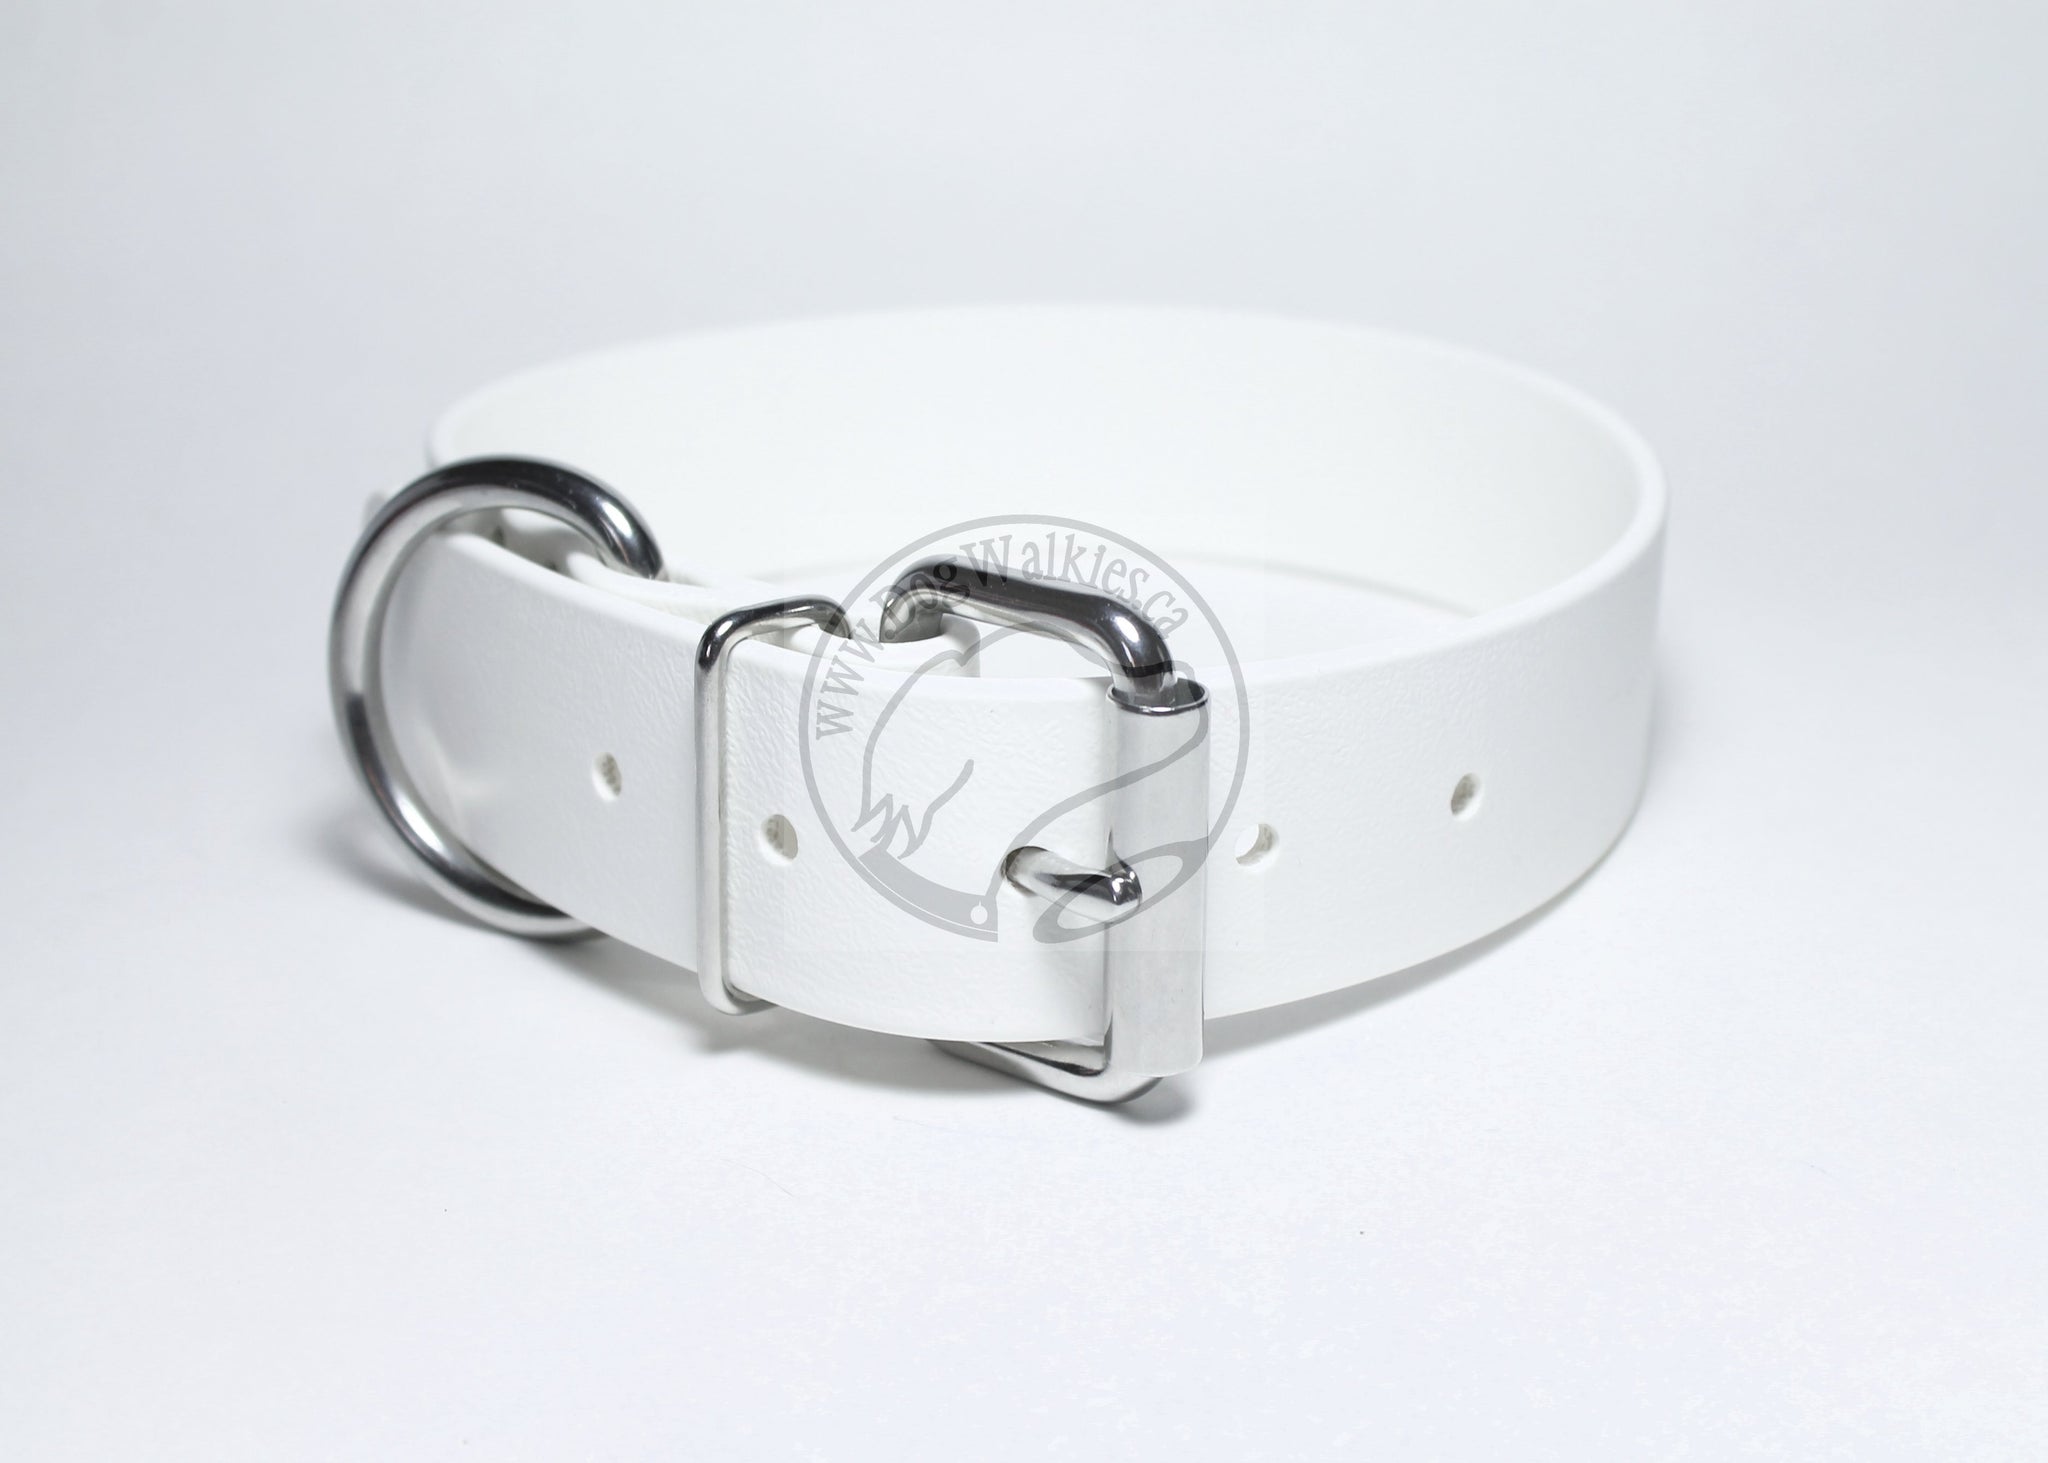 Snow White Biothane Dog Collar - Extra Wide - 1.5 inch (38mm) wide